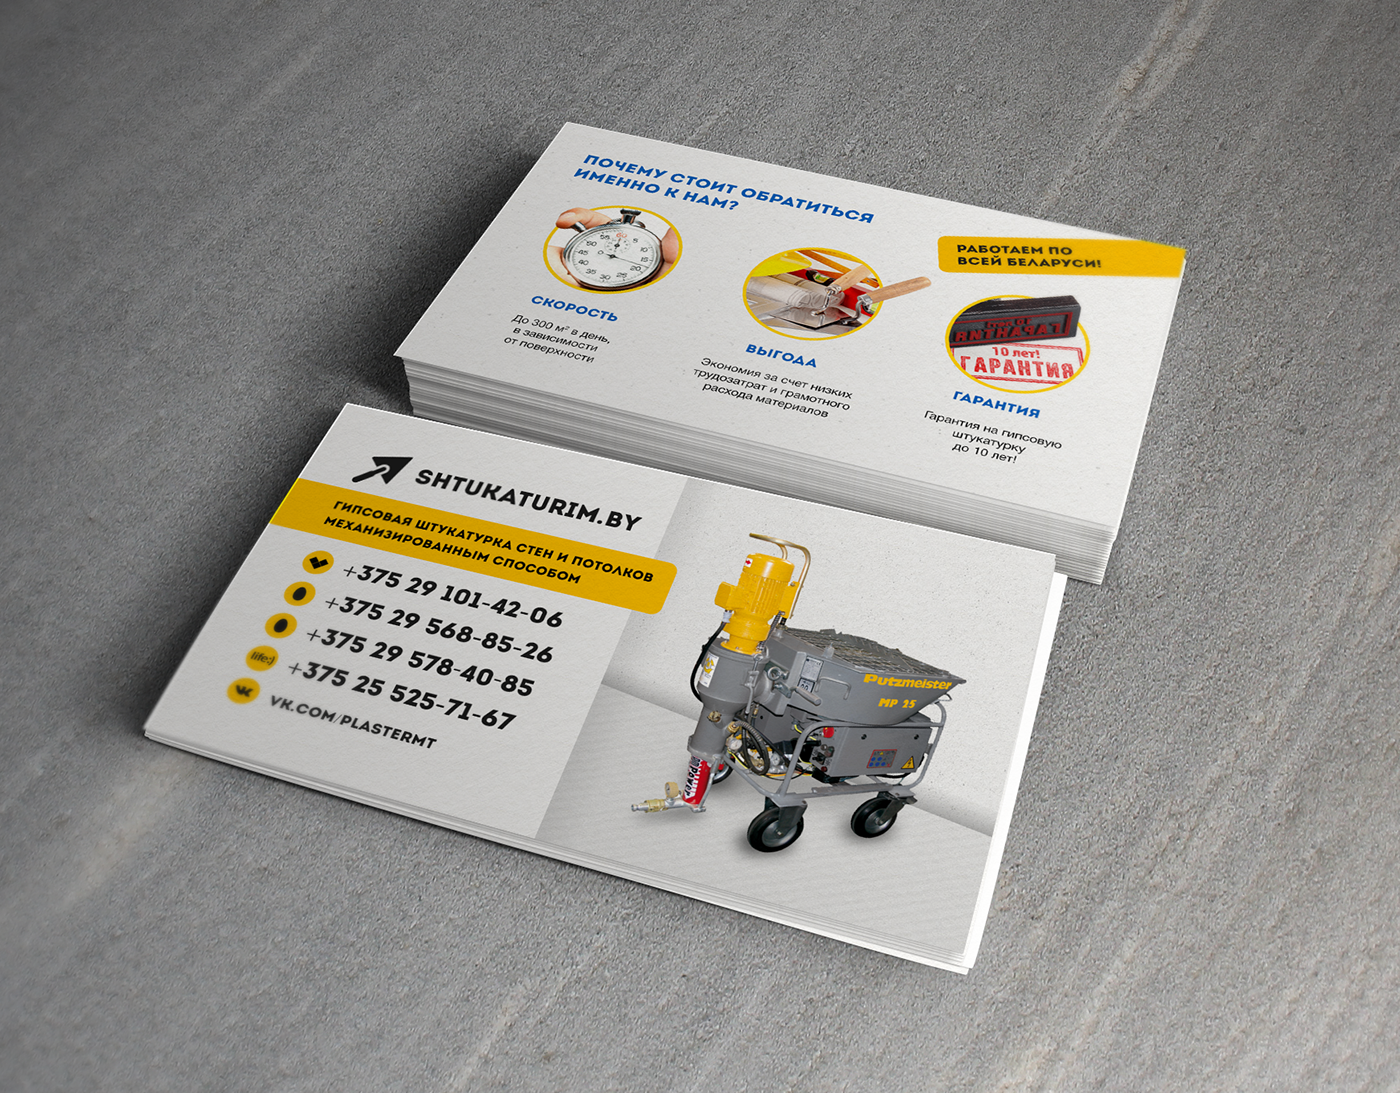 photoshop Mockup design veraxo awesome business card business card freelancer Freelance designer press